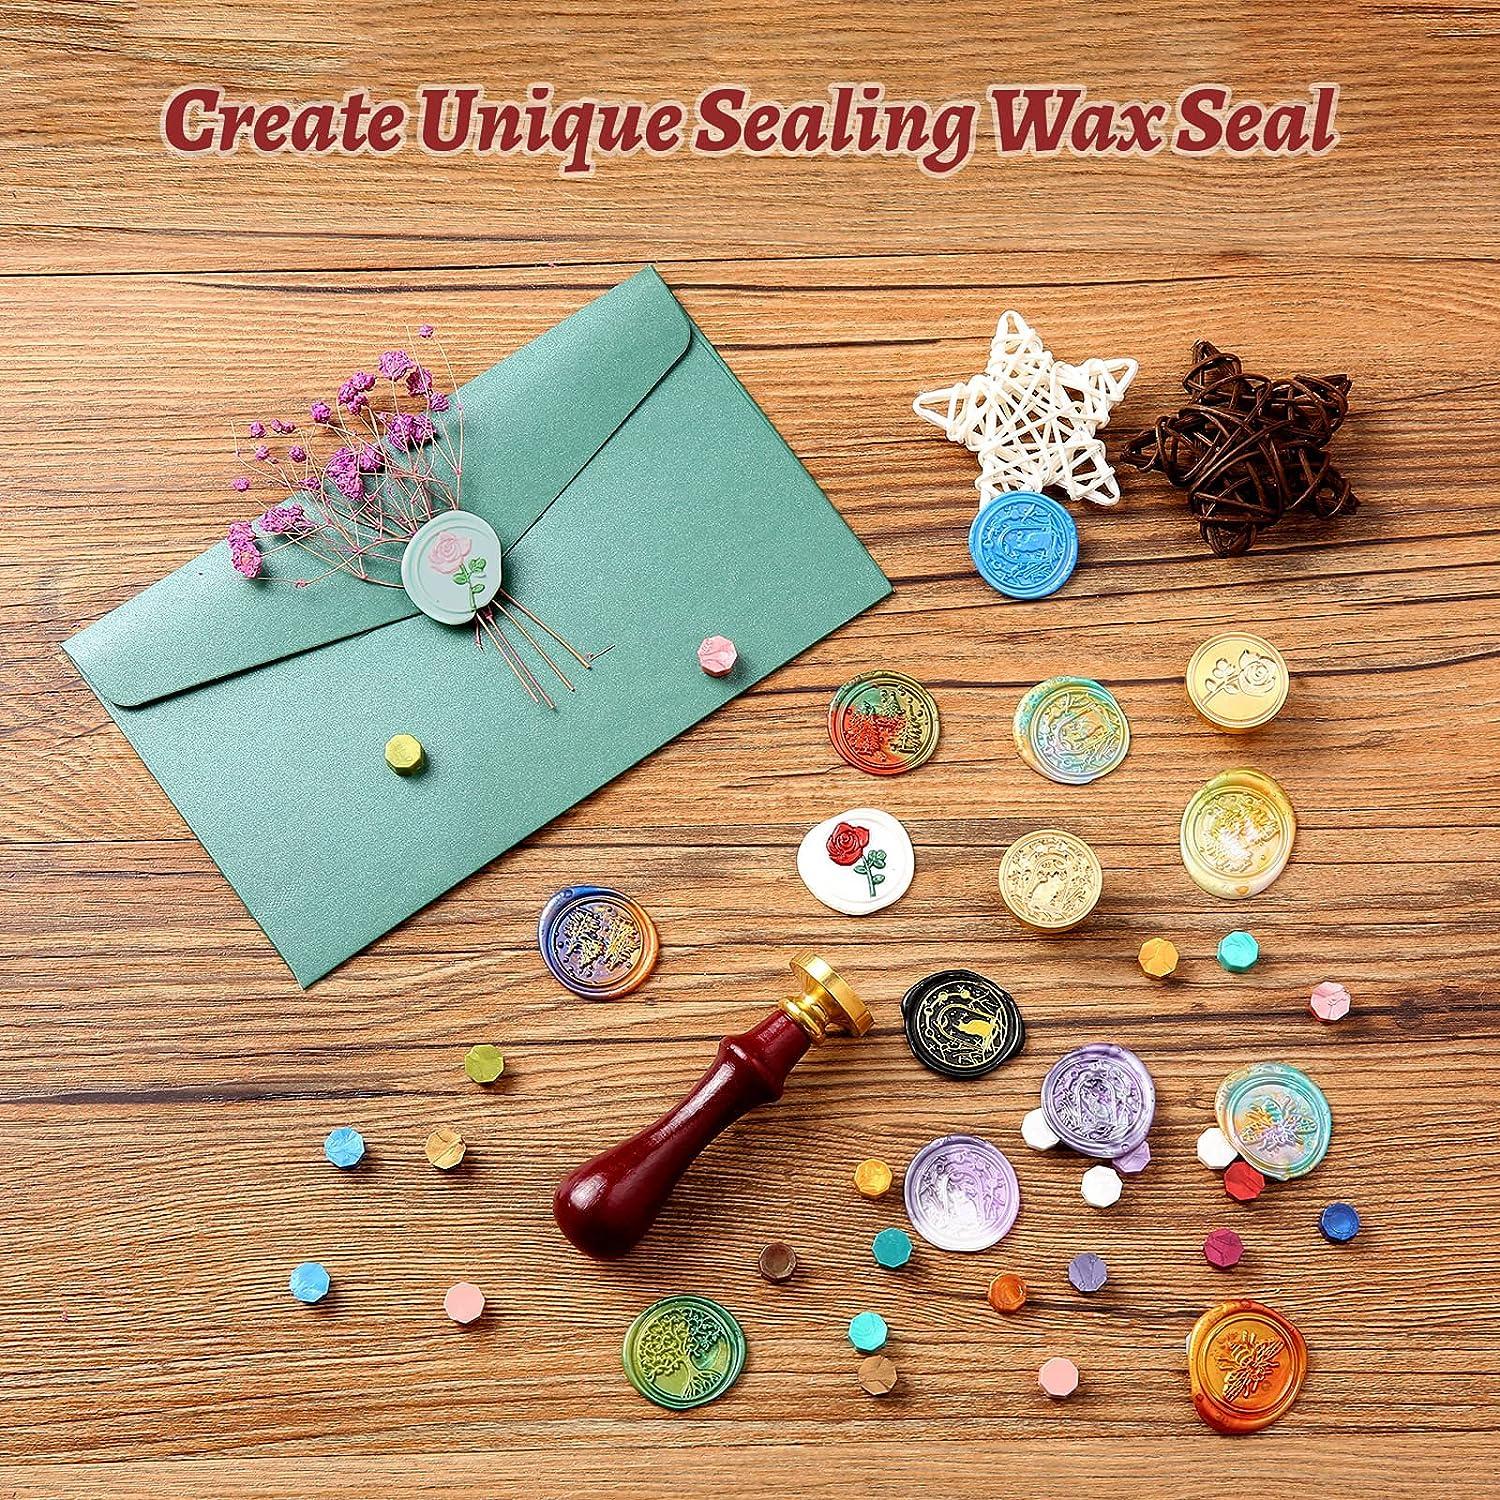 Comealltime Wax Seal Kit with Gift Box, 624 Pcs Wax Seal Beads with 2 Pcs  Wax Seal Stamps, Sealing Wax Warmer, Wax Seal Metallic Pen, Envelope